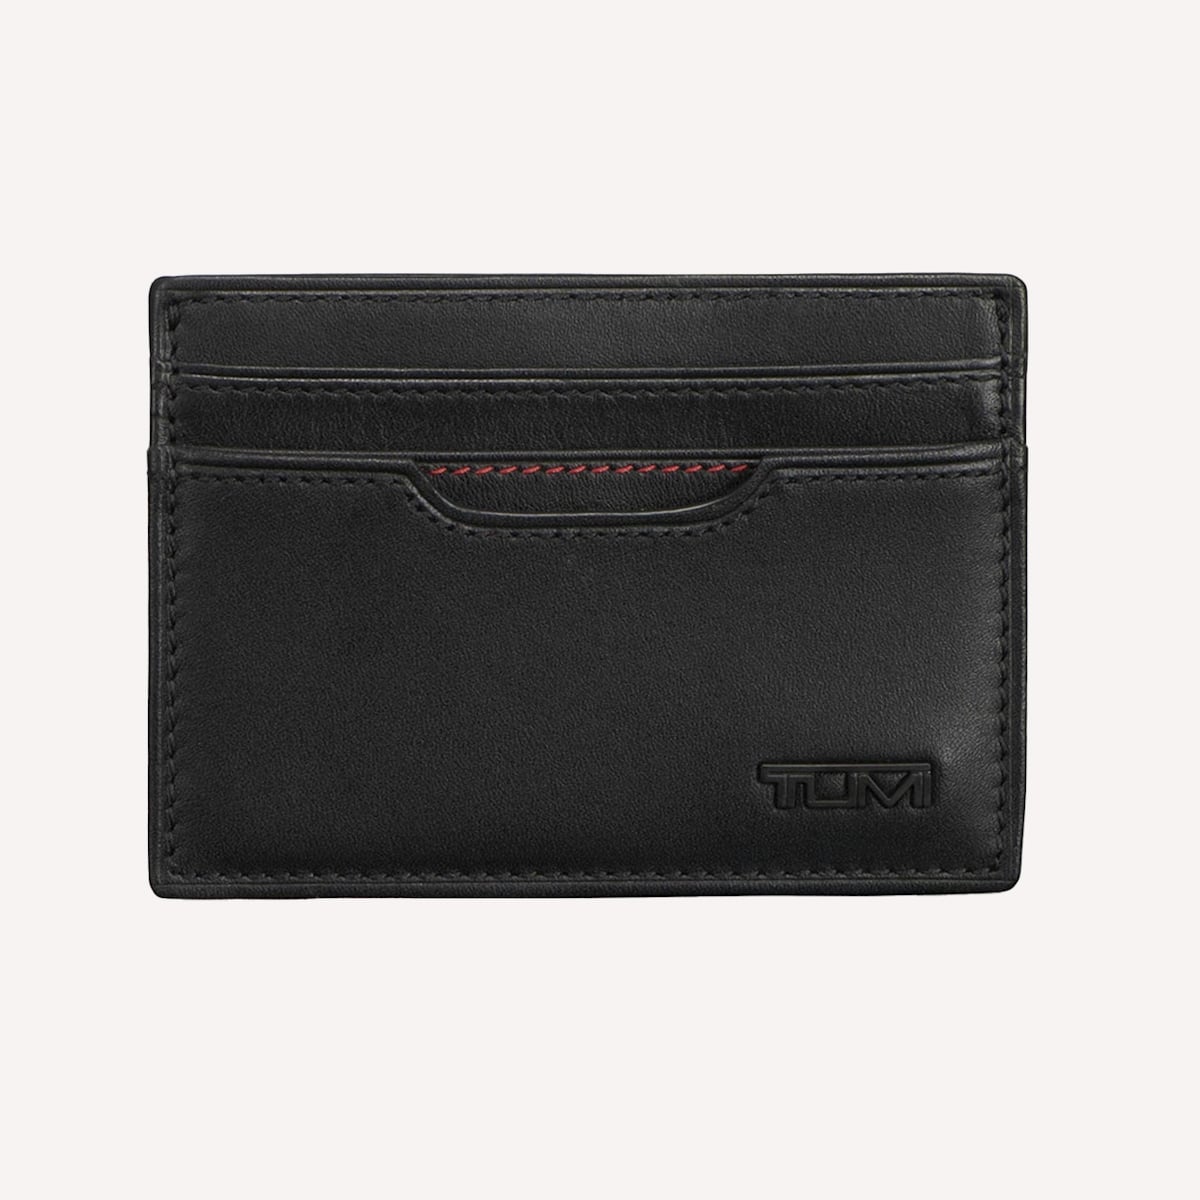 Best Travel Wallet Double Zipper Money Clip Men's Clutch Genuine Leather 9069B Black